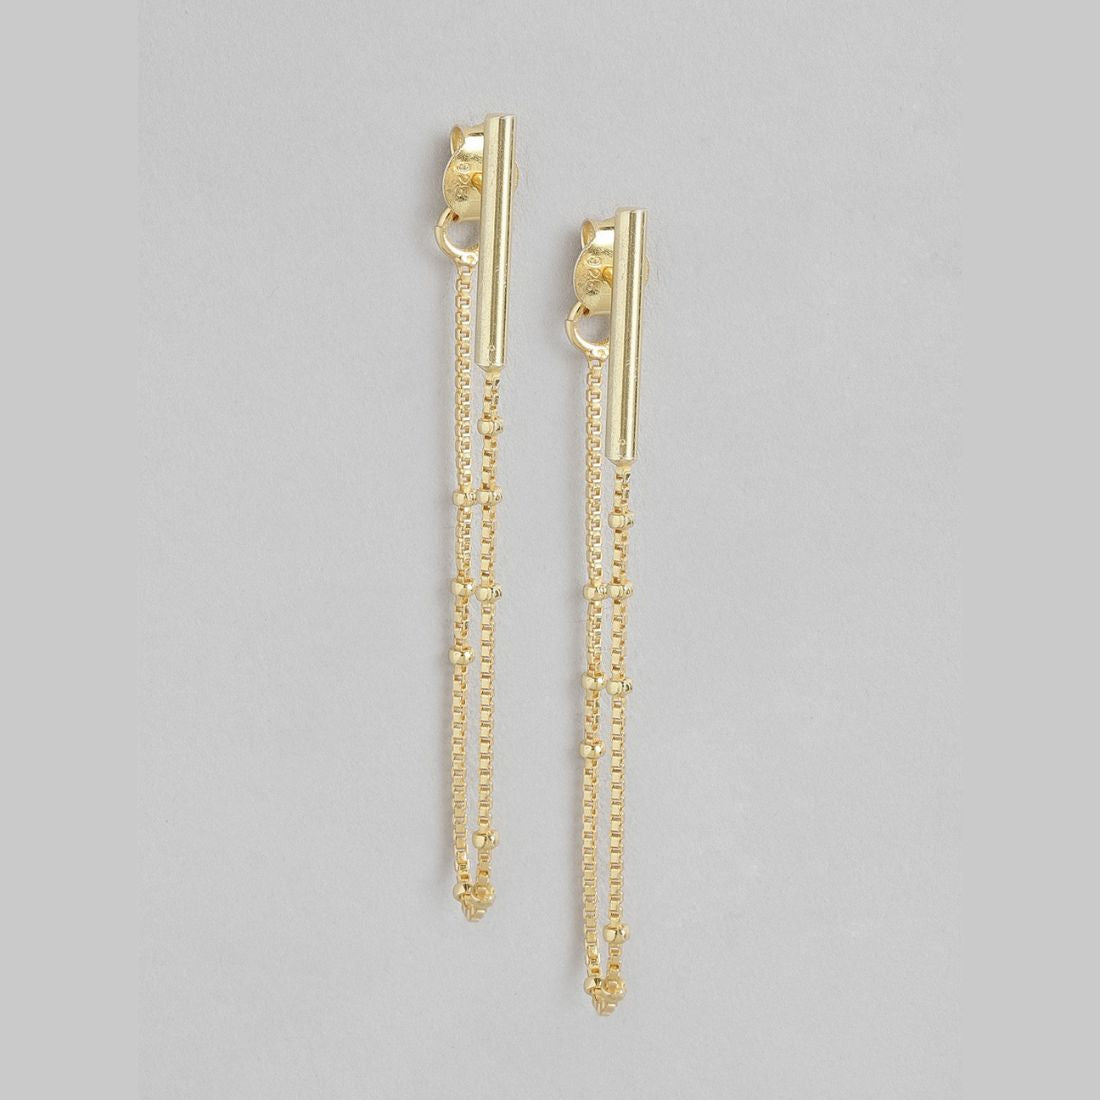 Golden Cascade 925 Sterling Silver Stud Earrings with Drop Chain Look